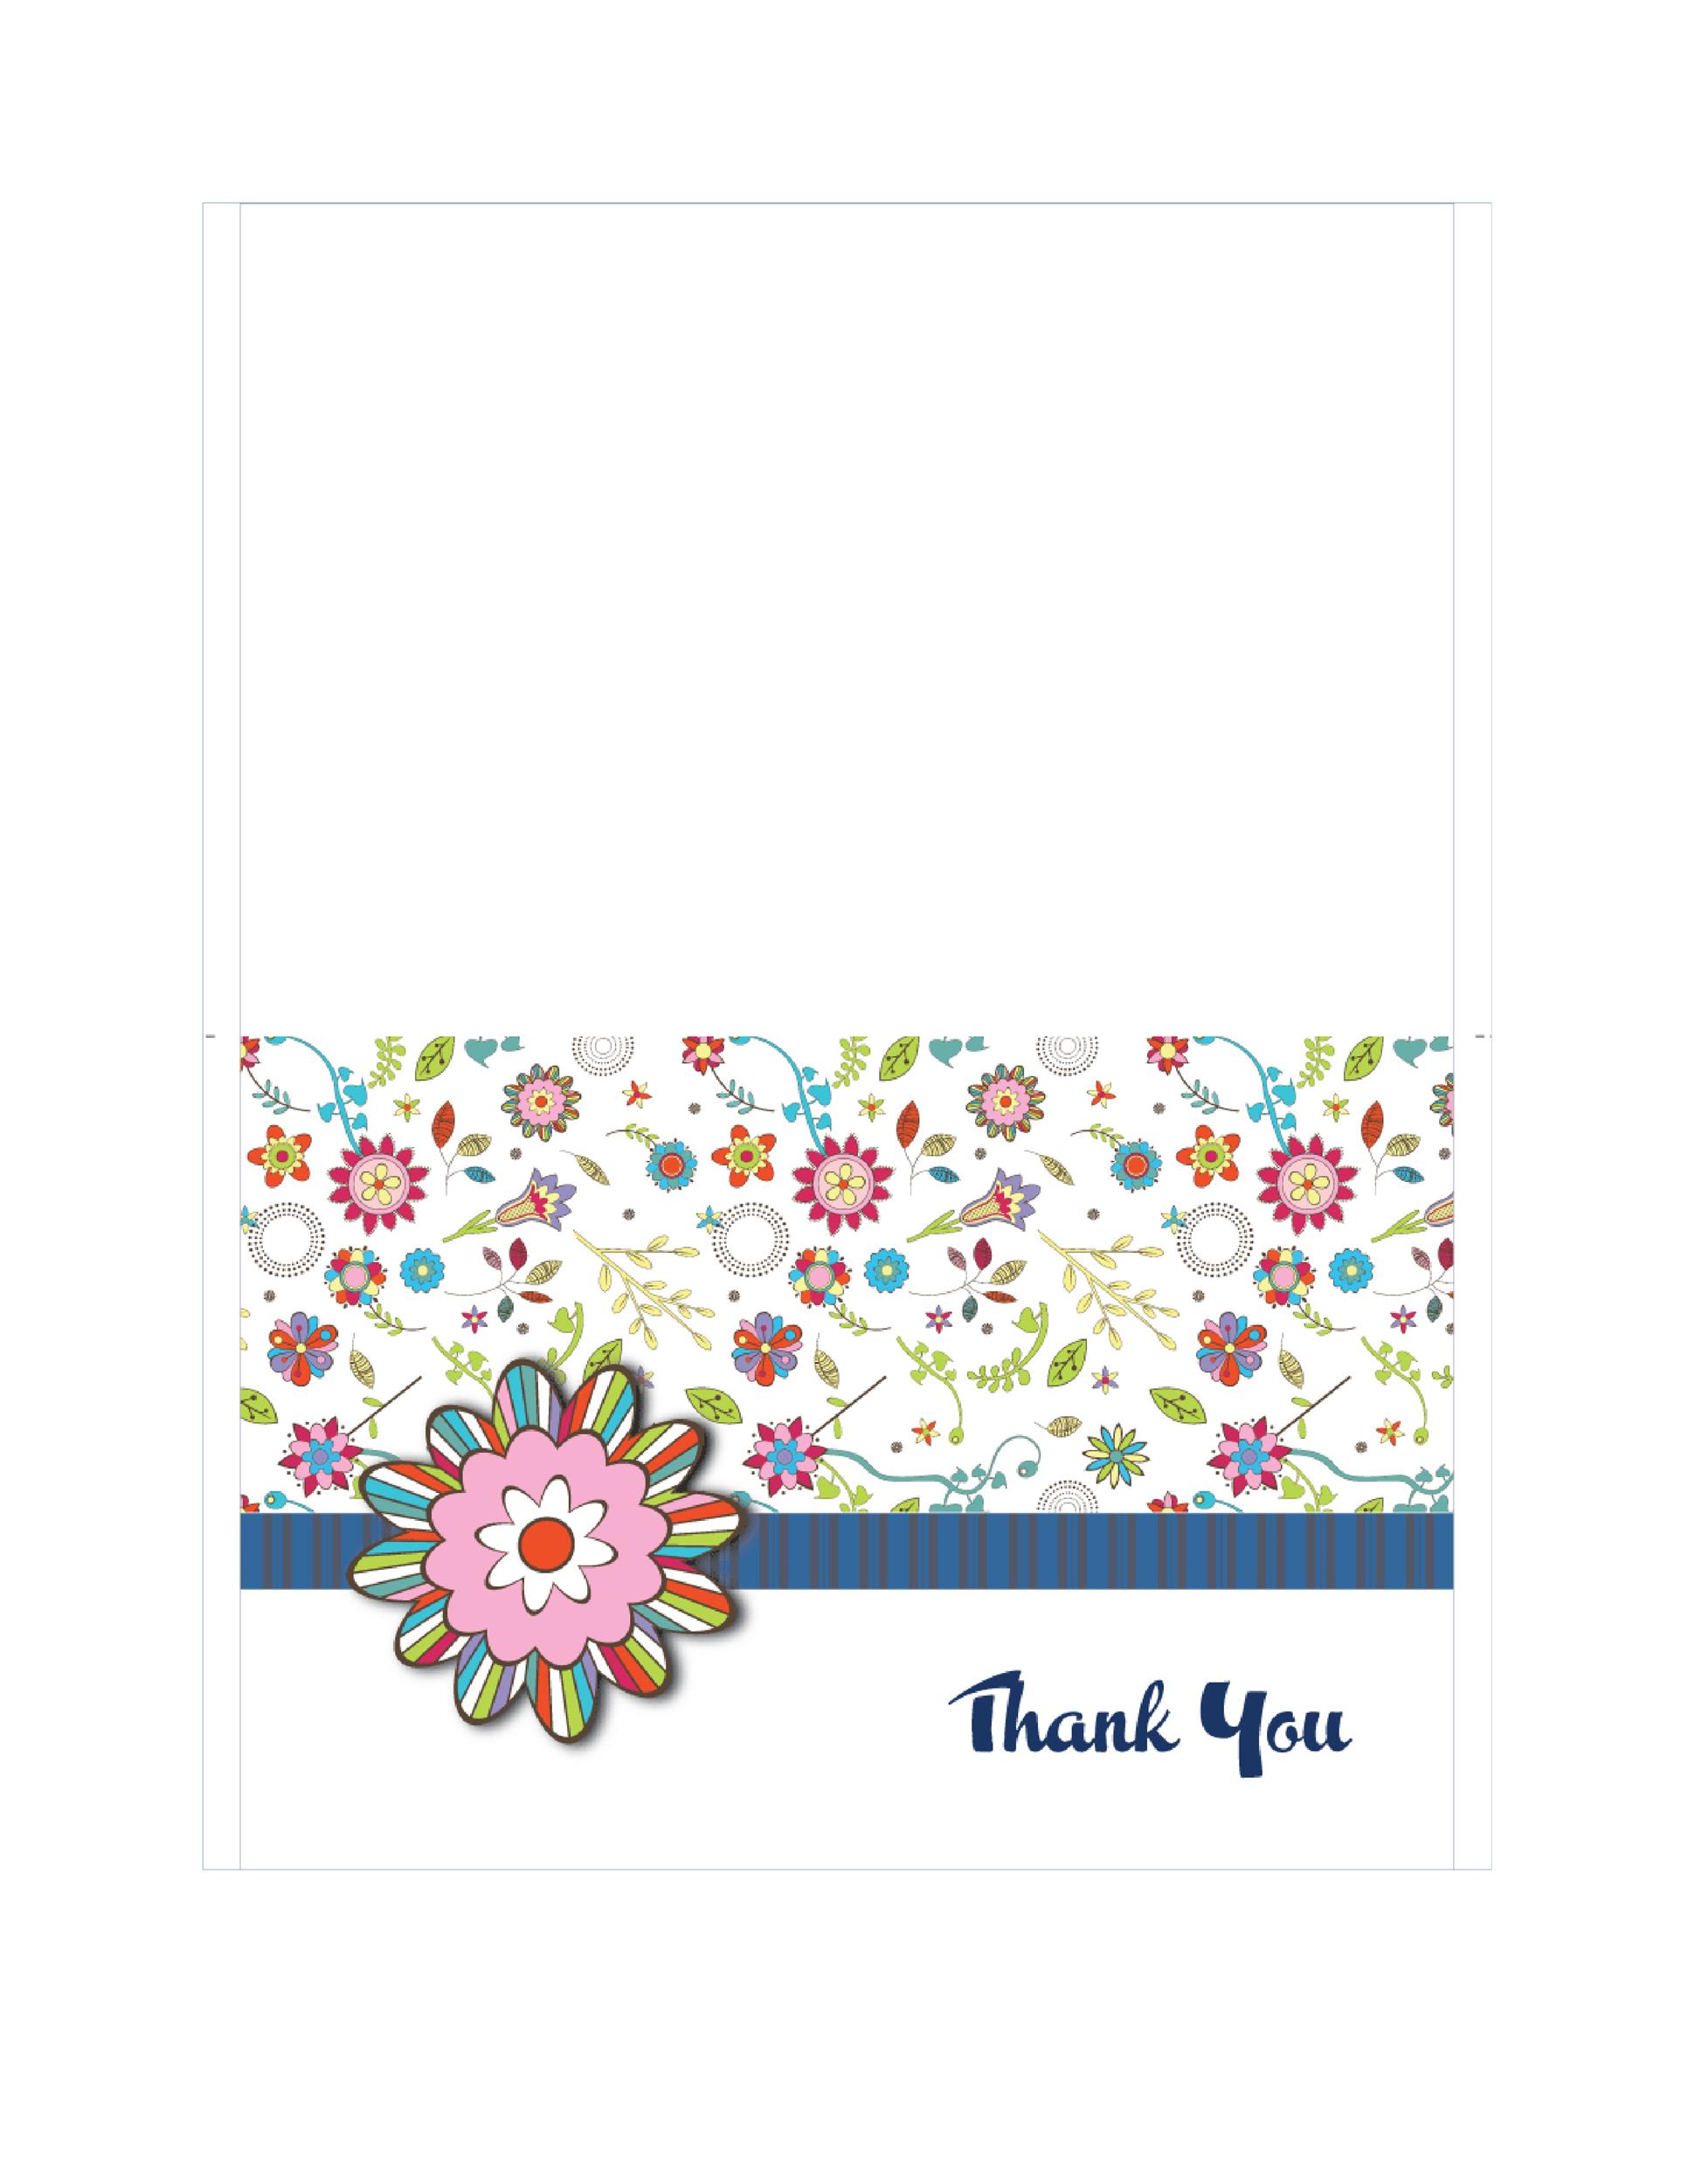 30-free-printable-thank-you-card-templates-wedding-graduation-business